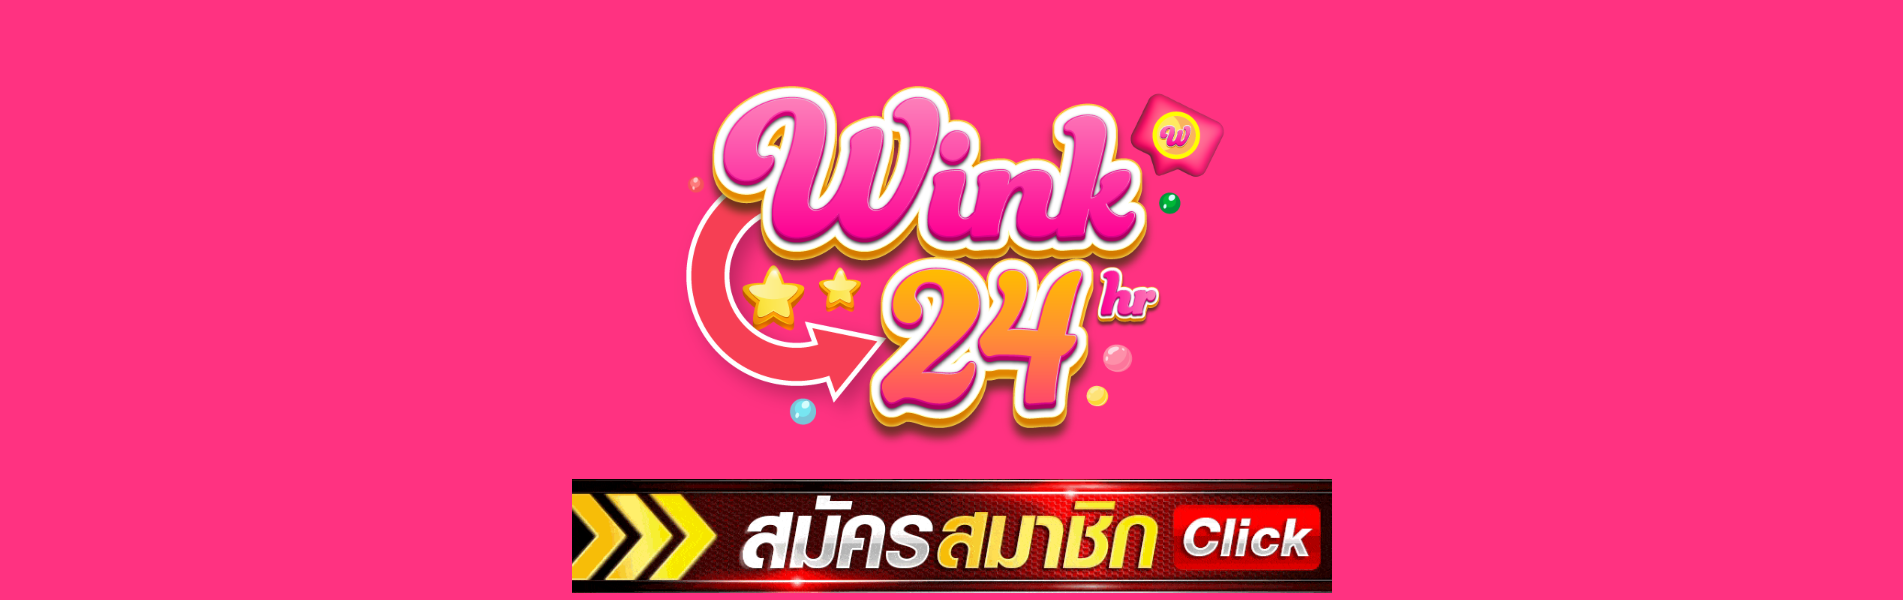 wink24